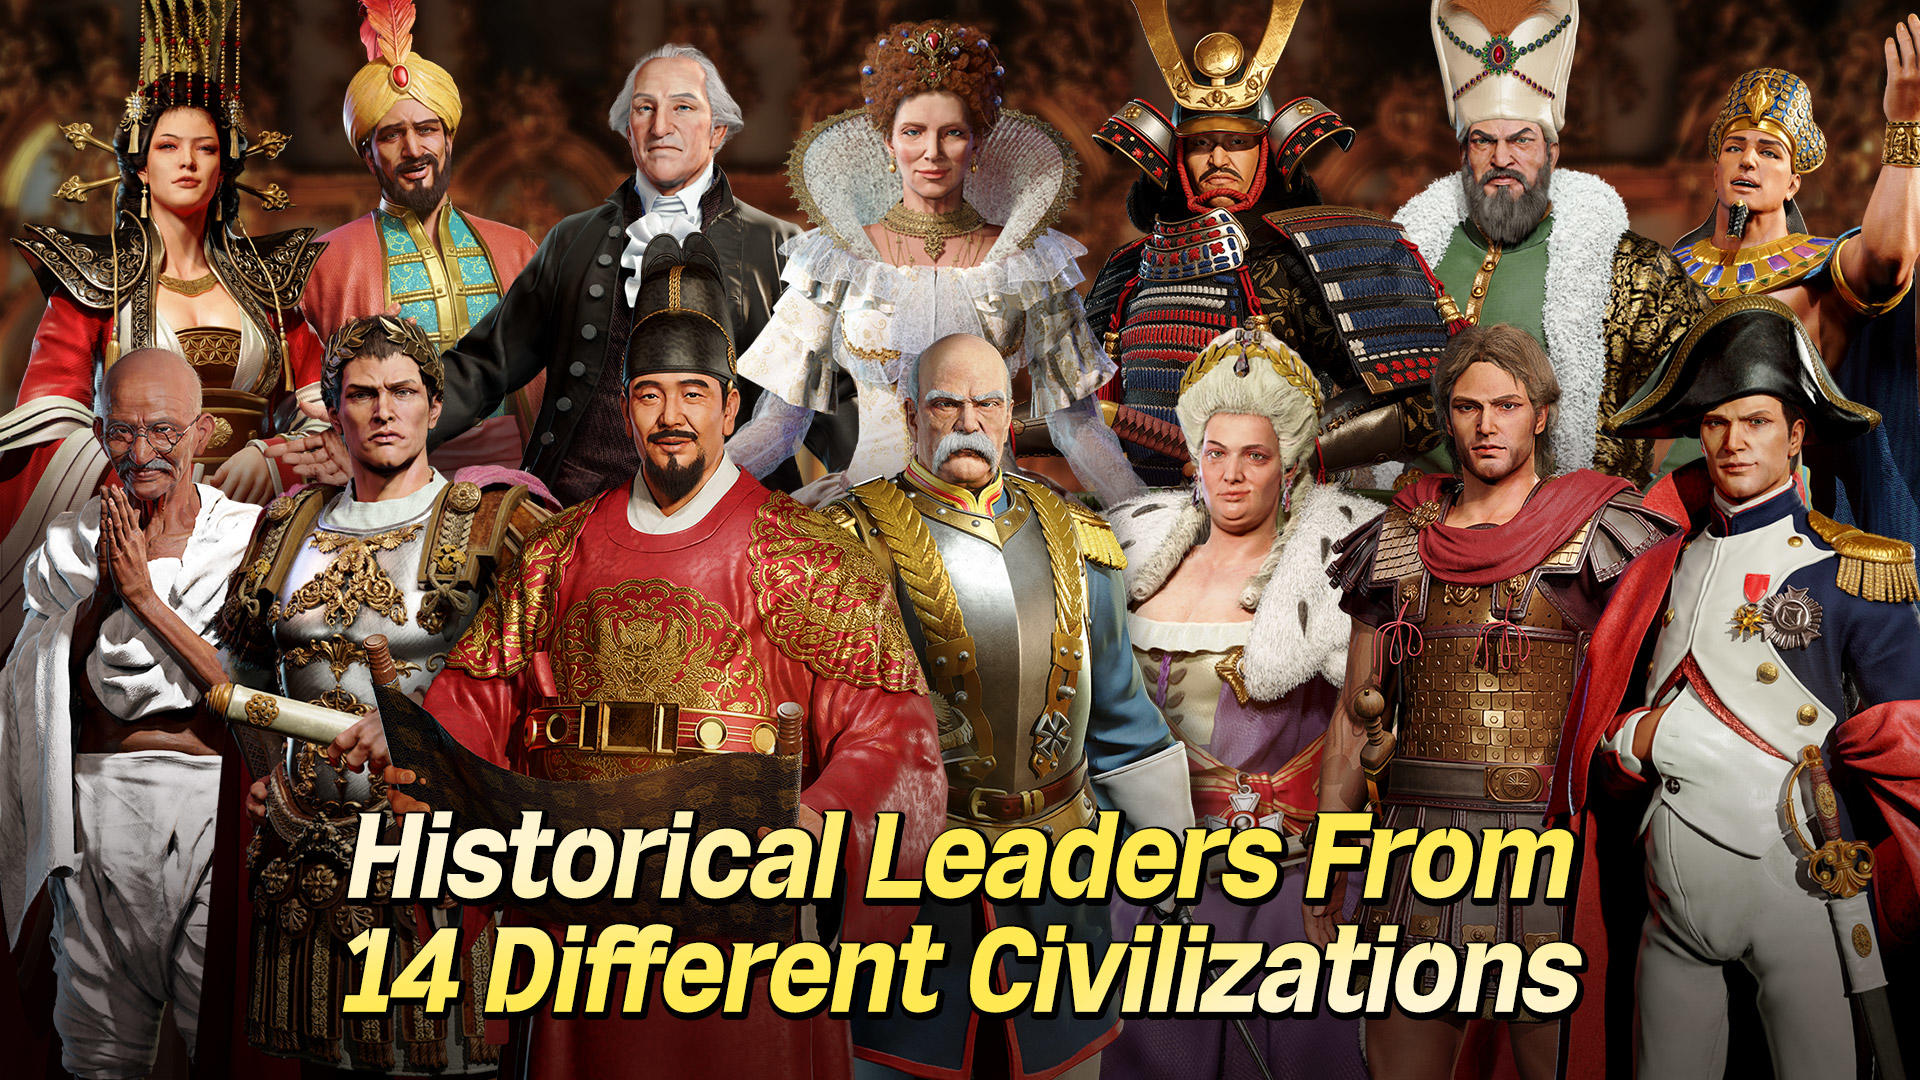 Civilization: Reign of Power screenshot game